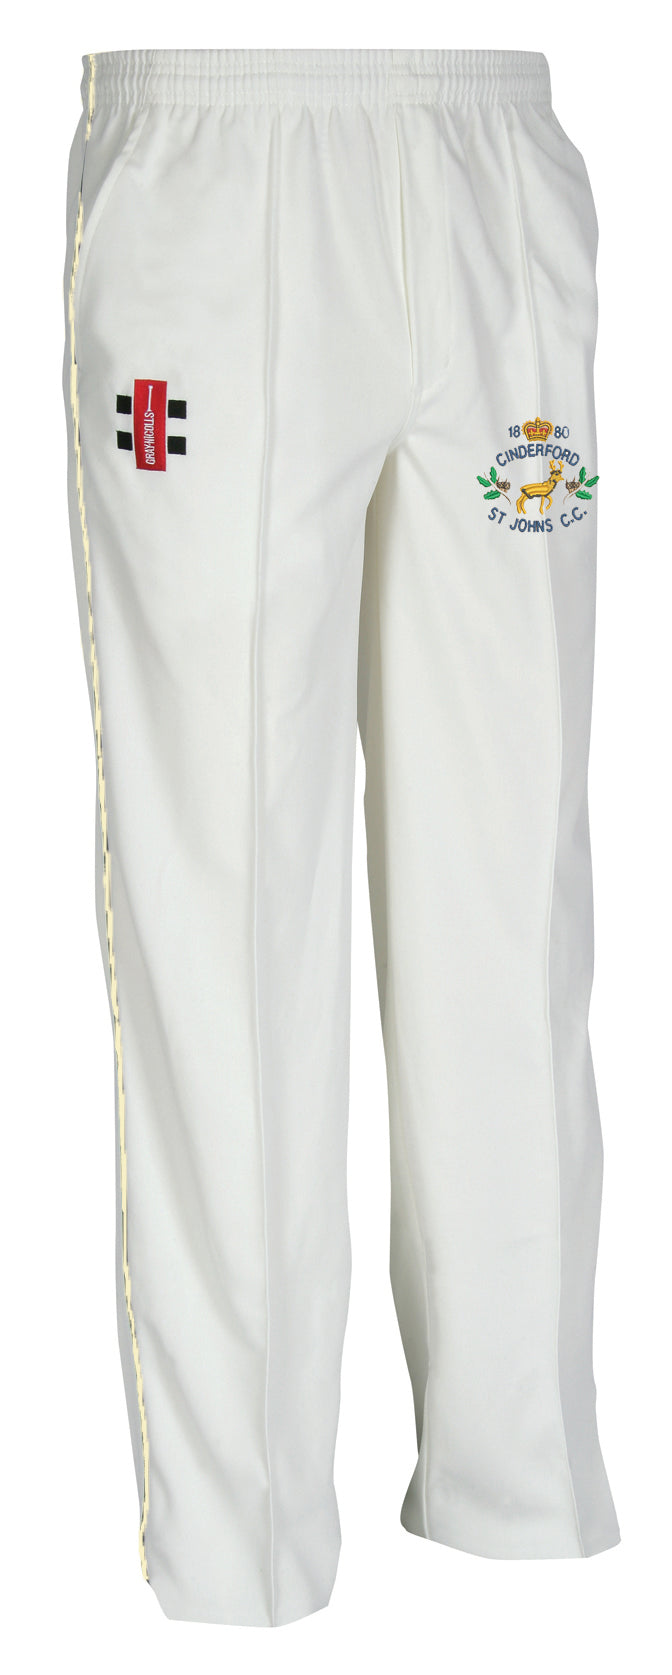 Cinderford St Johns CC Matrix Cricket Trouser